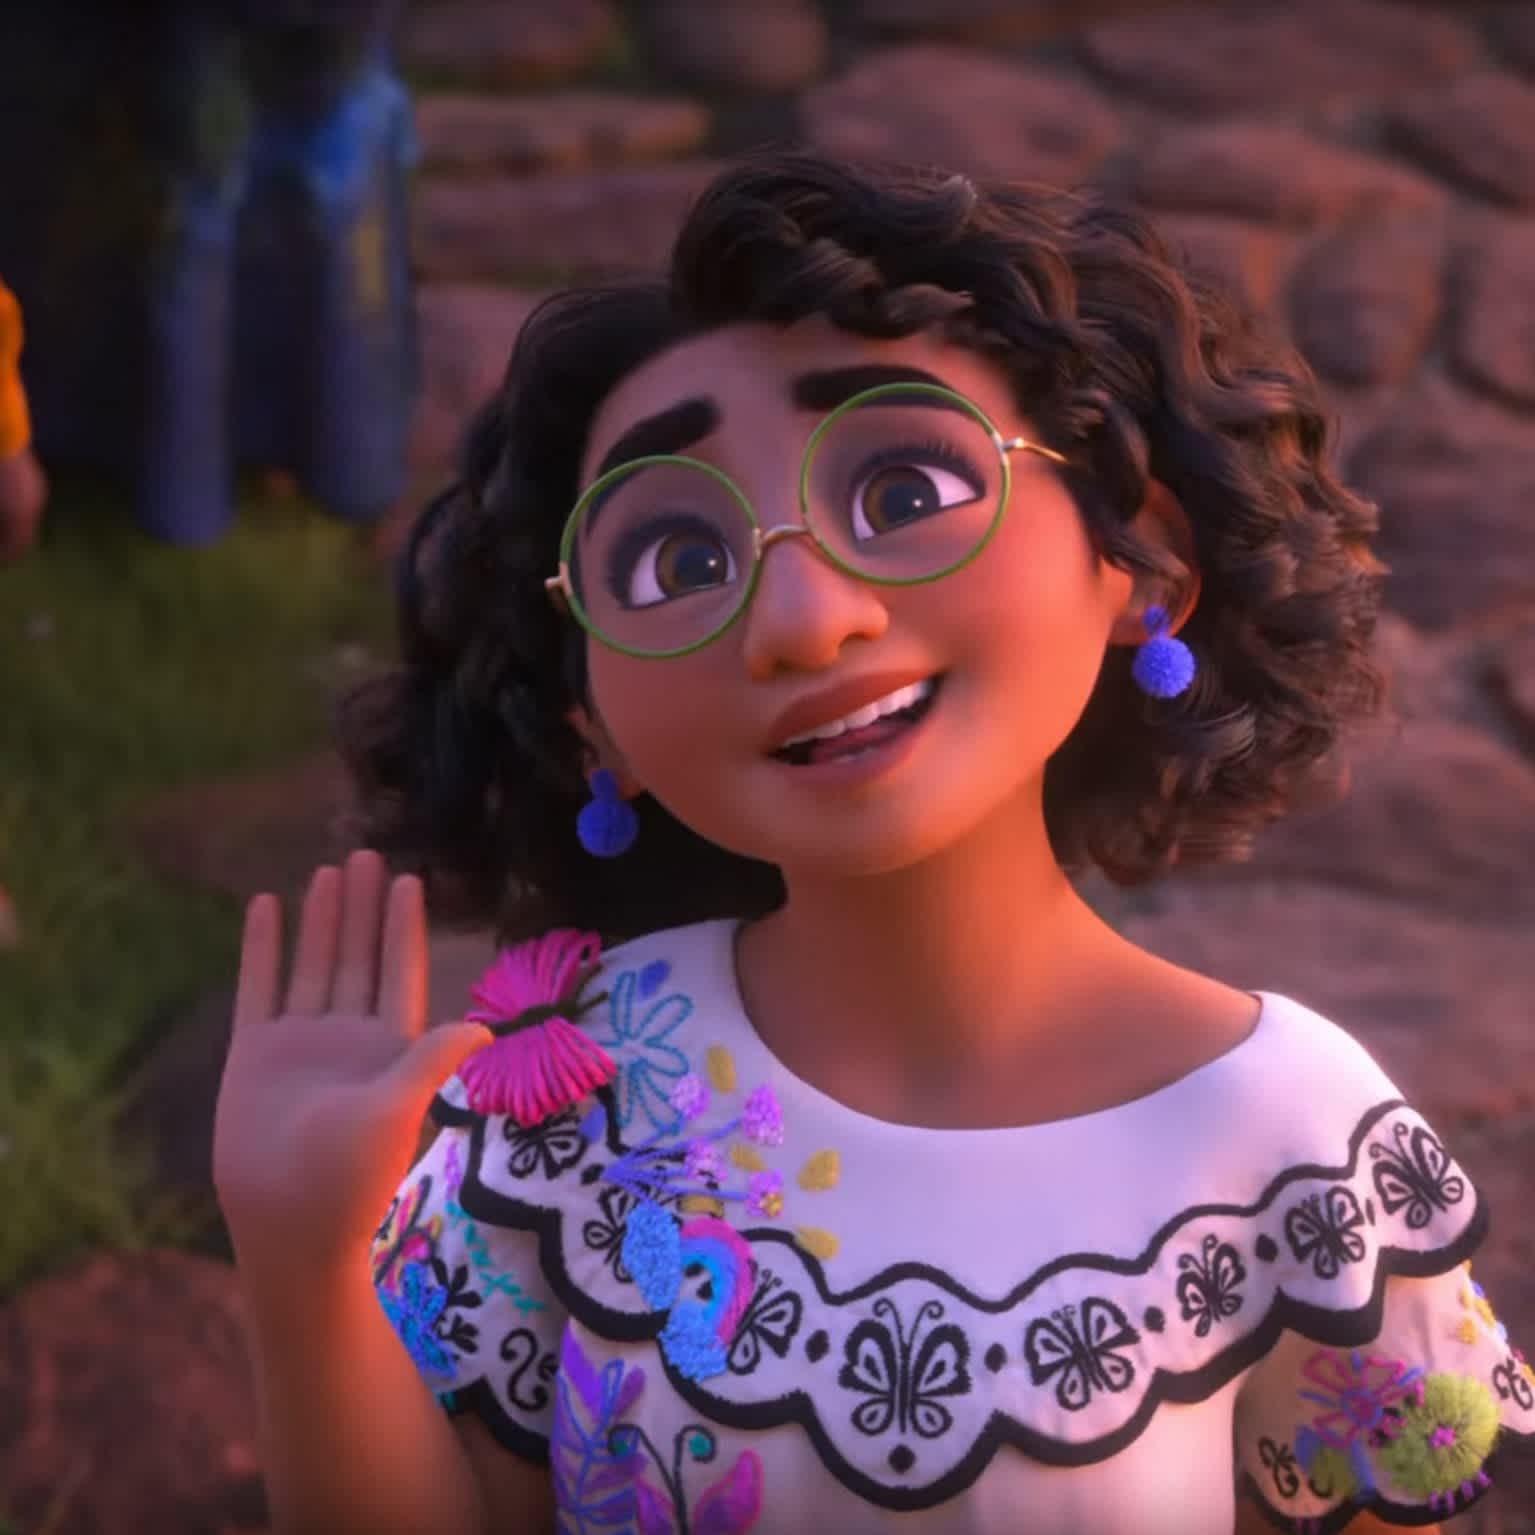 Encanto” Mirabel Profile Avatar Added To Disney+, What's On Disney Plus